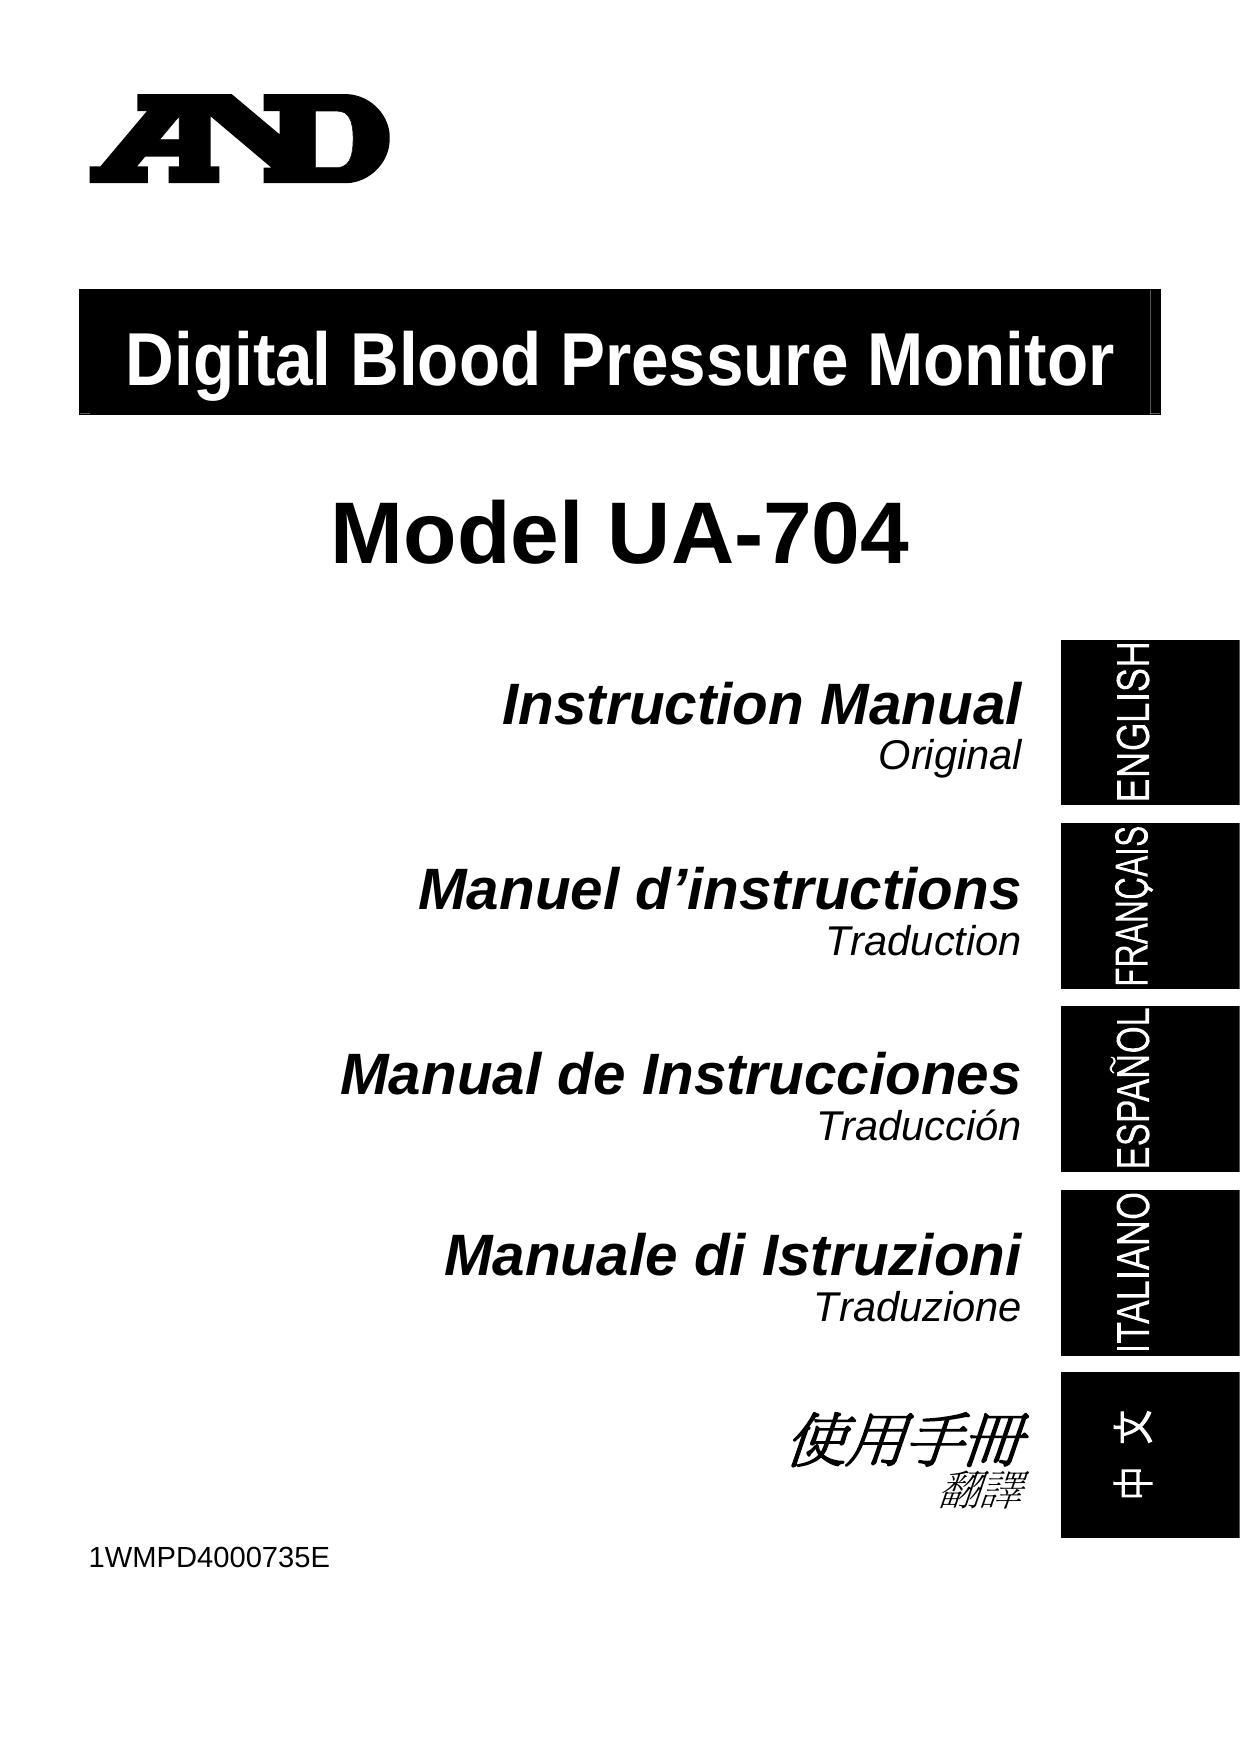 ad-digital-blood-pressure-monitor-model-ua-704-instruction-manual.pdf